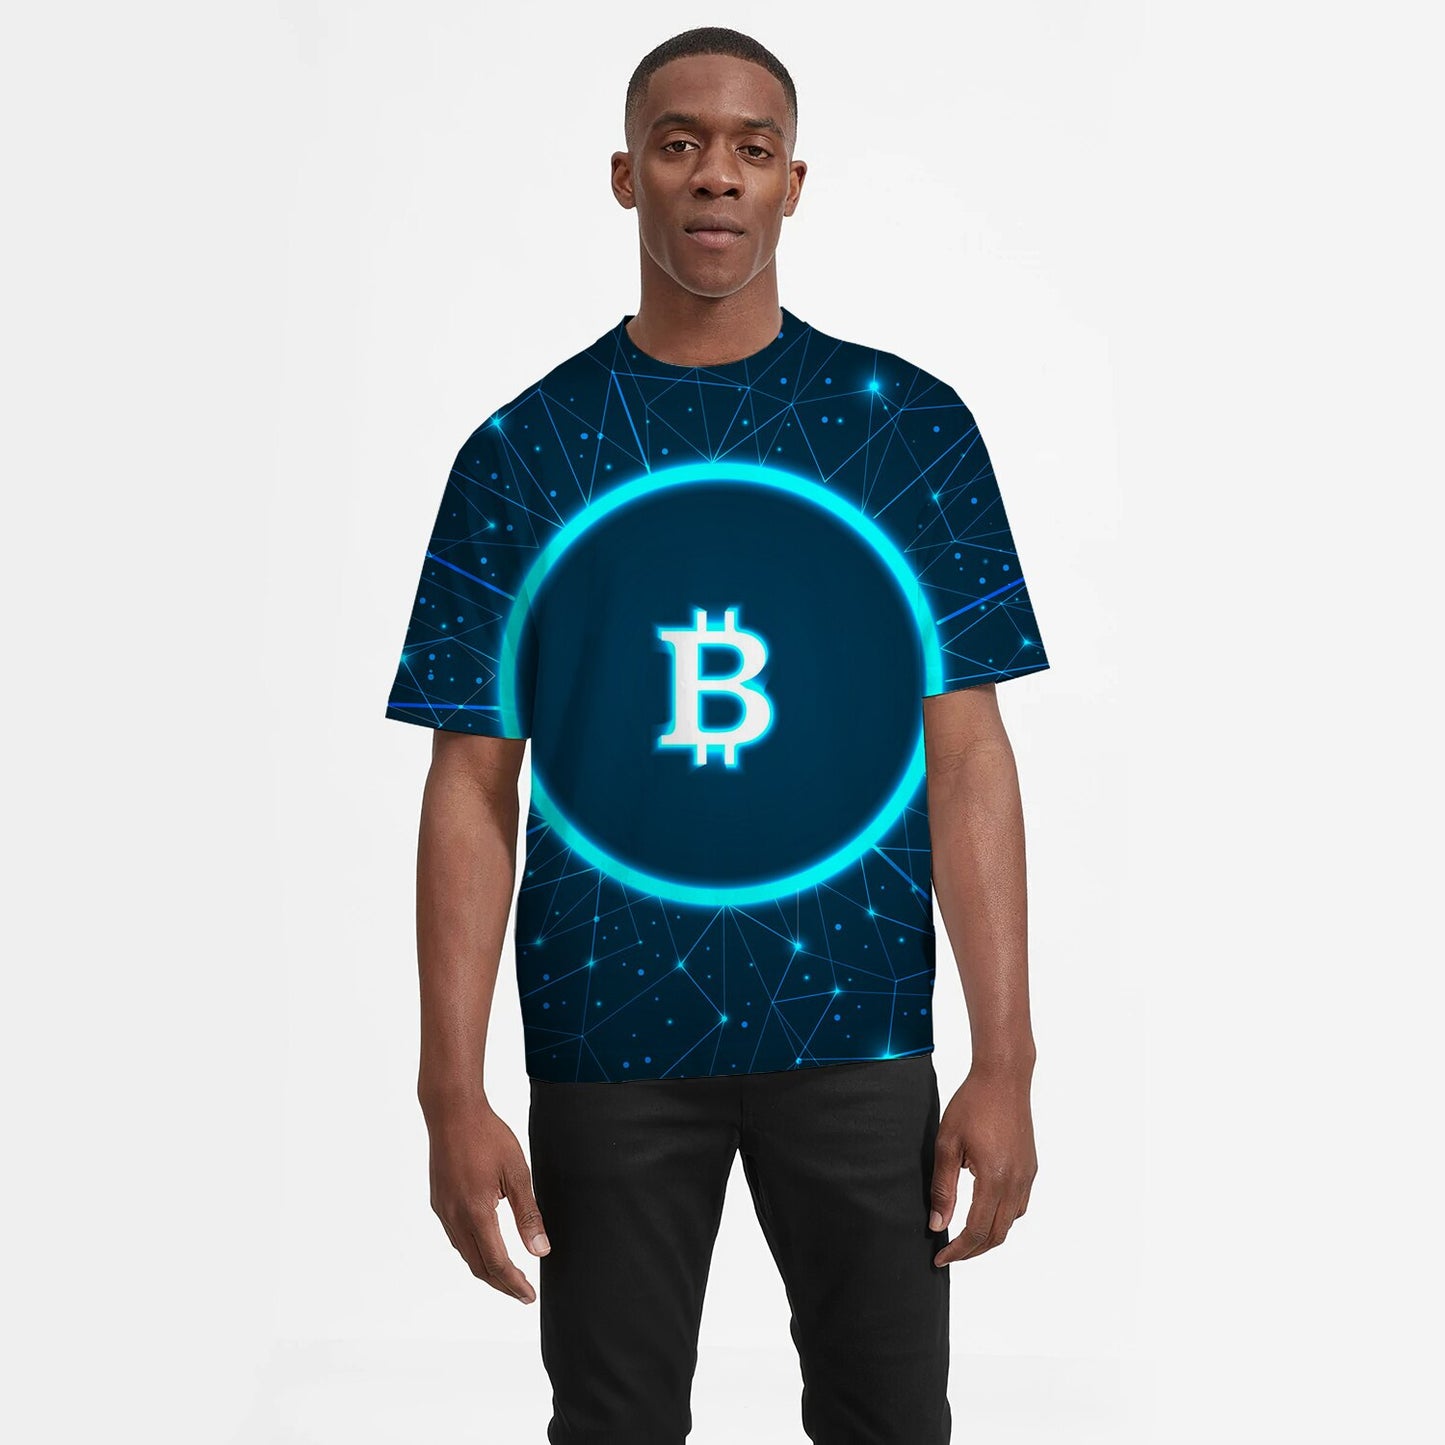 Neues Bitcoin-T-Shirt